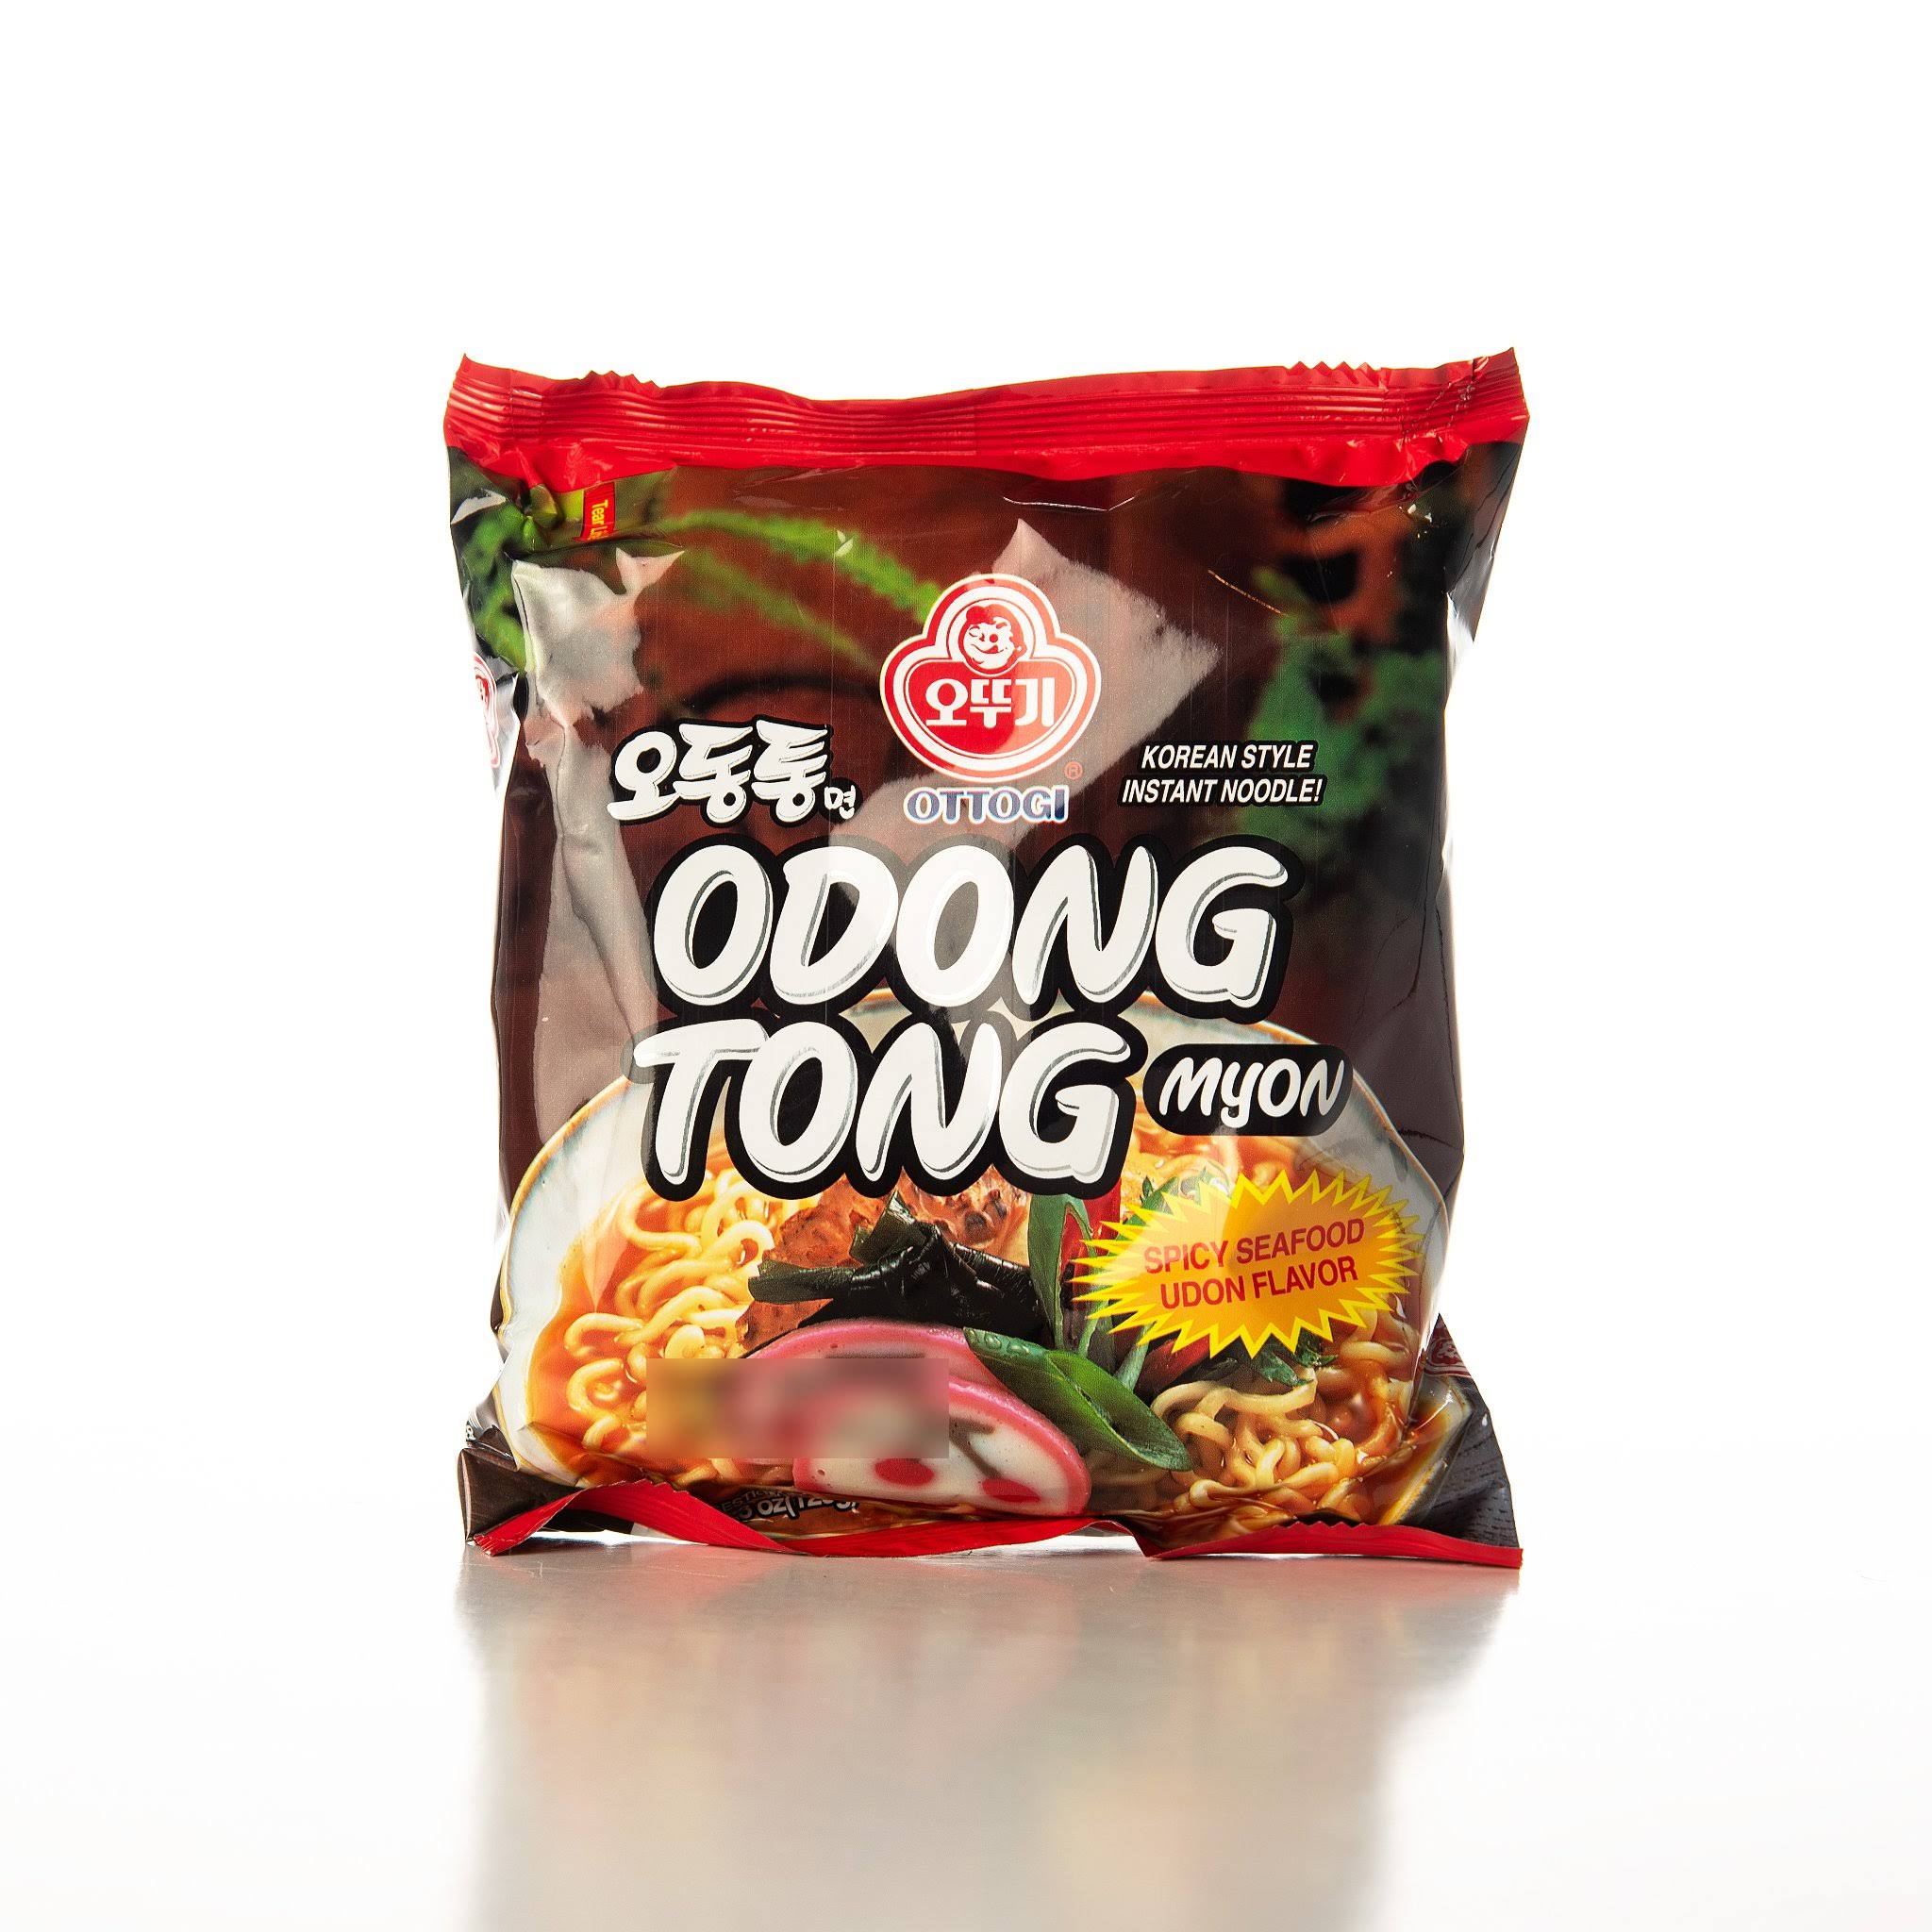 Ottogi Odongtong Myon Spicy Seafood Udon Noodle